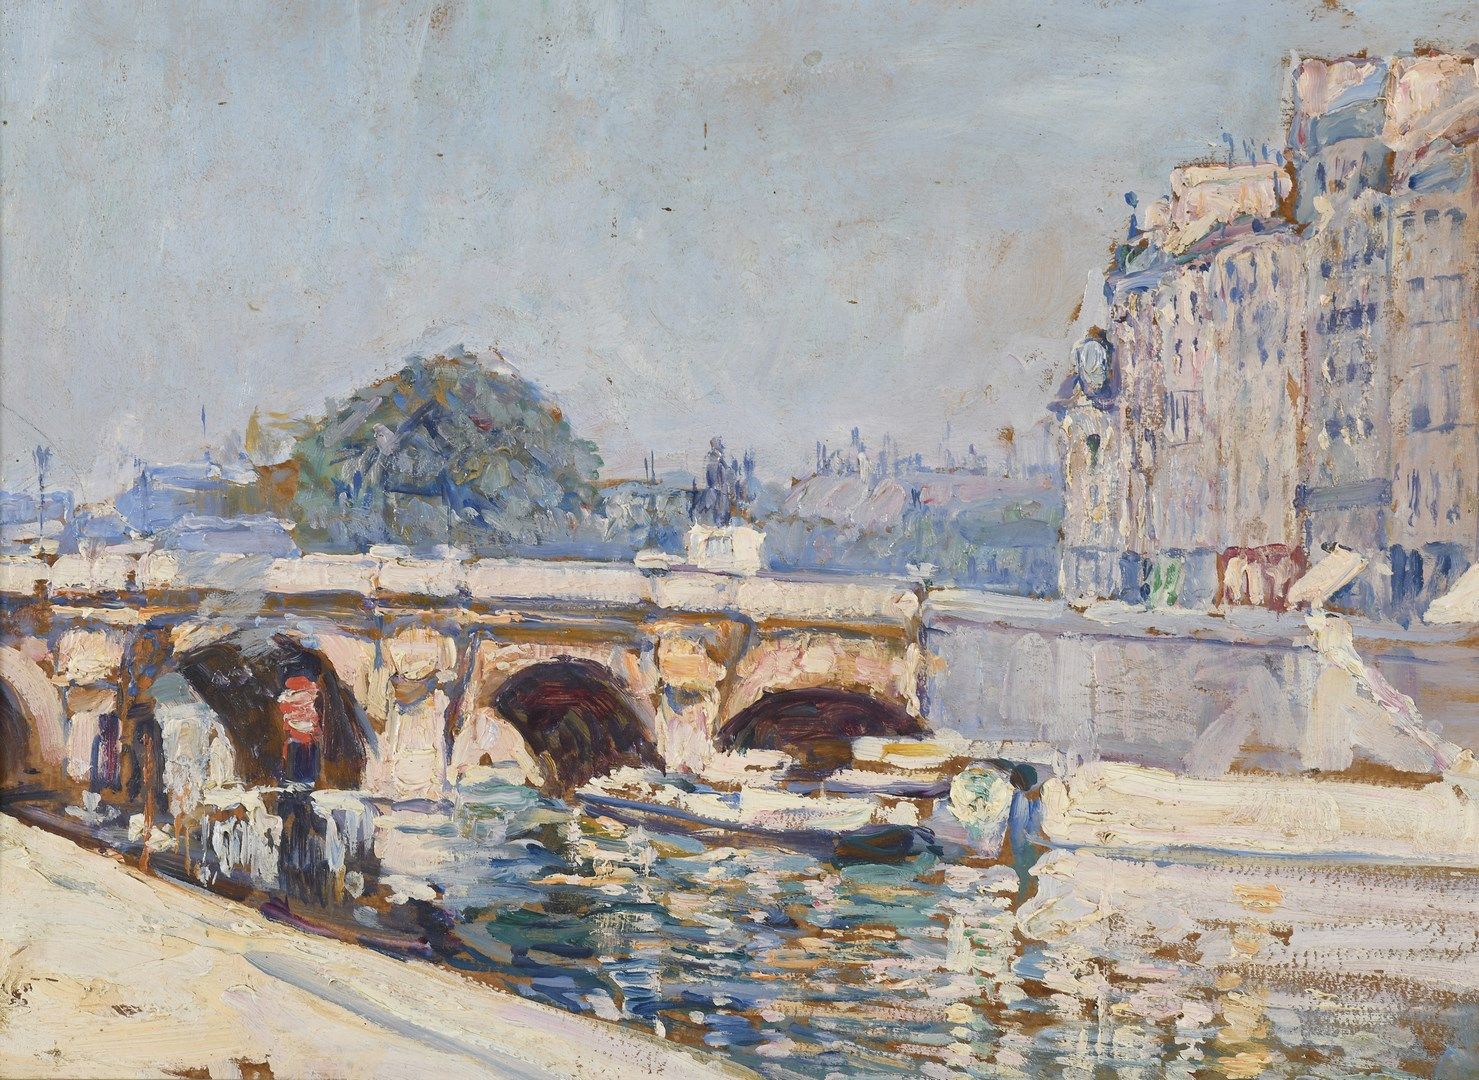 Null 罗歇-卡米尔，1894-1948

塞纳河在尼夫桥，1909年

油彩在坚固的纸板上

背面有图案和日期

30 x 40厘米